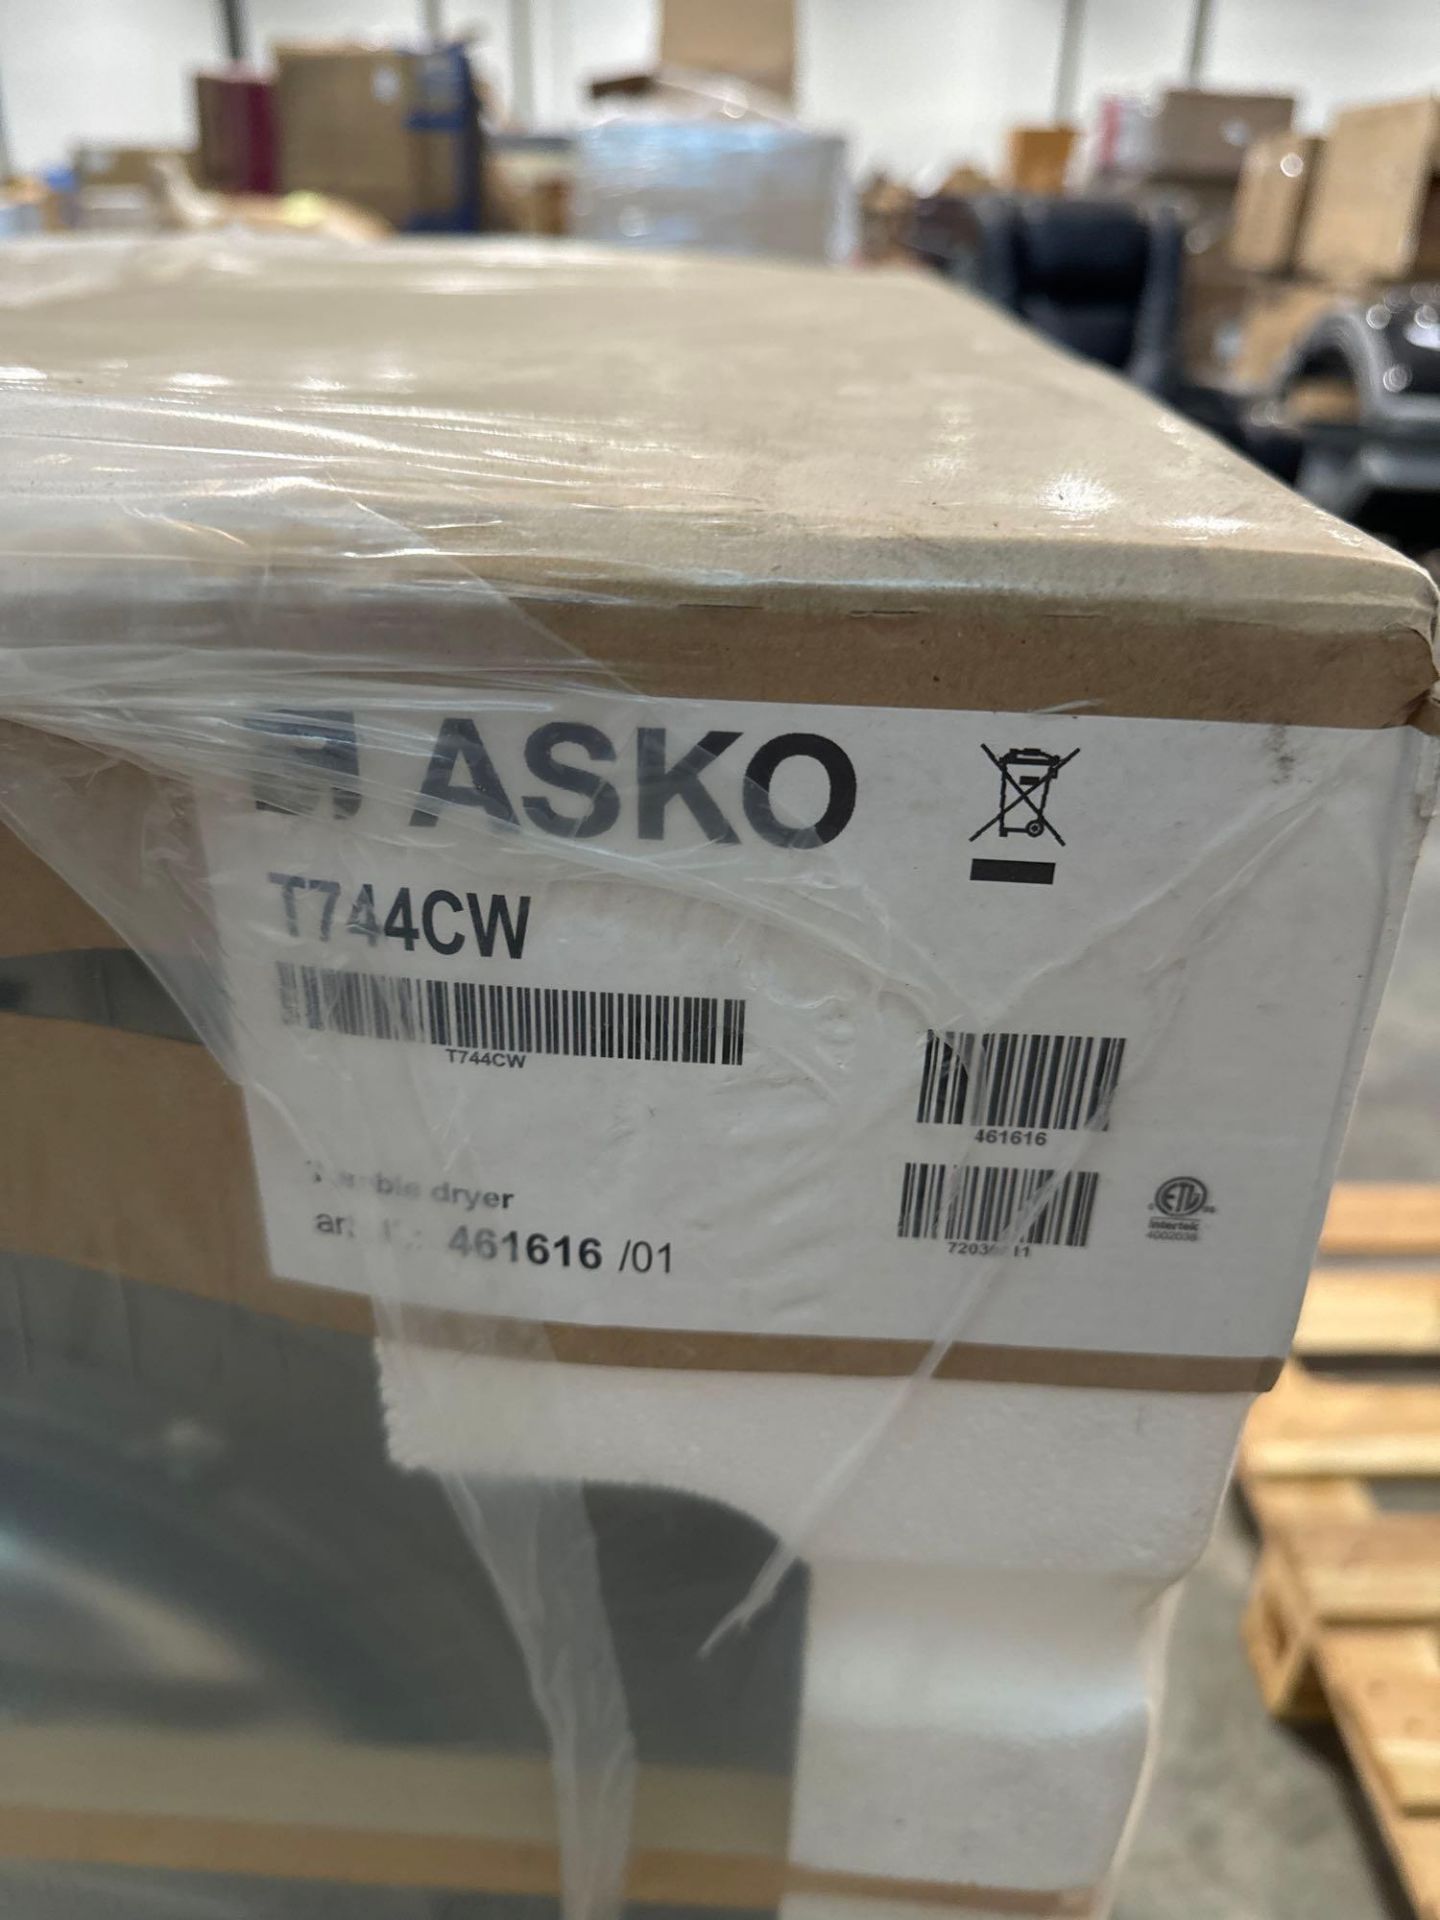 Asko Dryer T744CW - Image 3 of 3